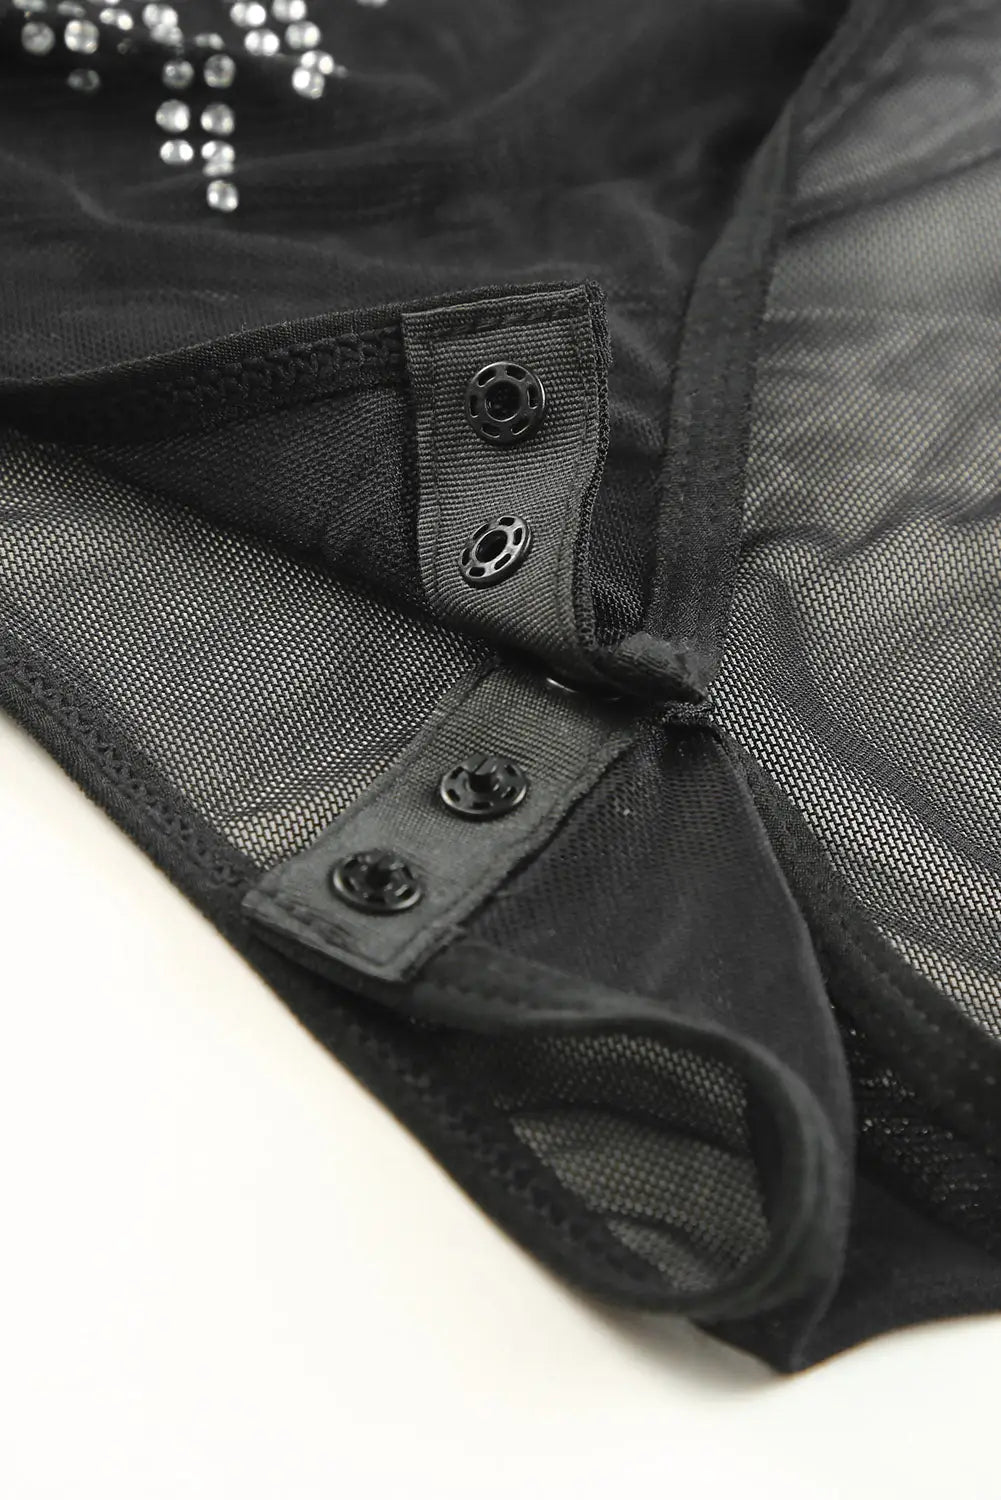 Black rhinestone sheer mesh long sleeve bodysuit - bodysuits